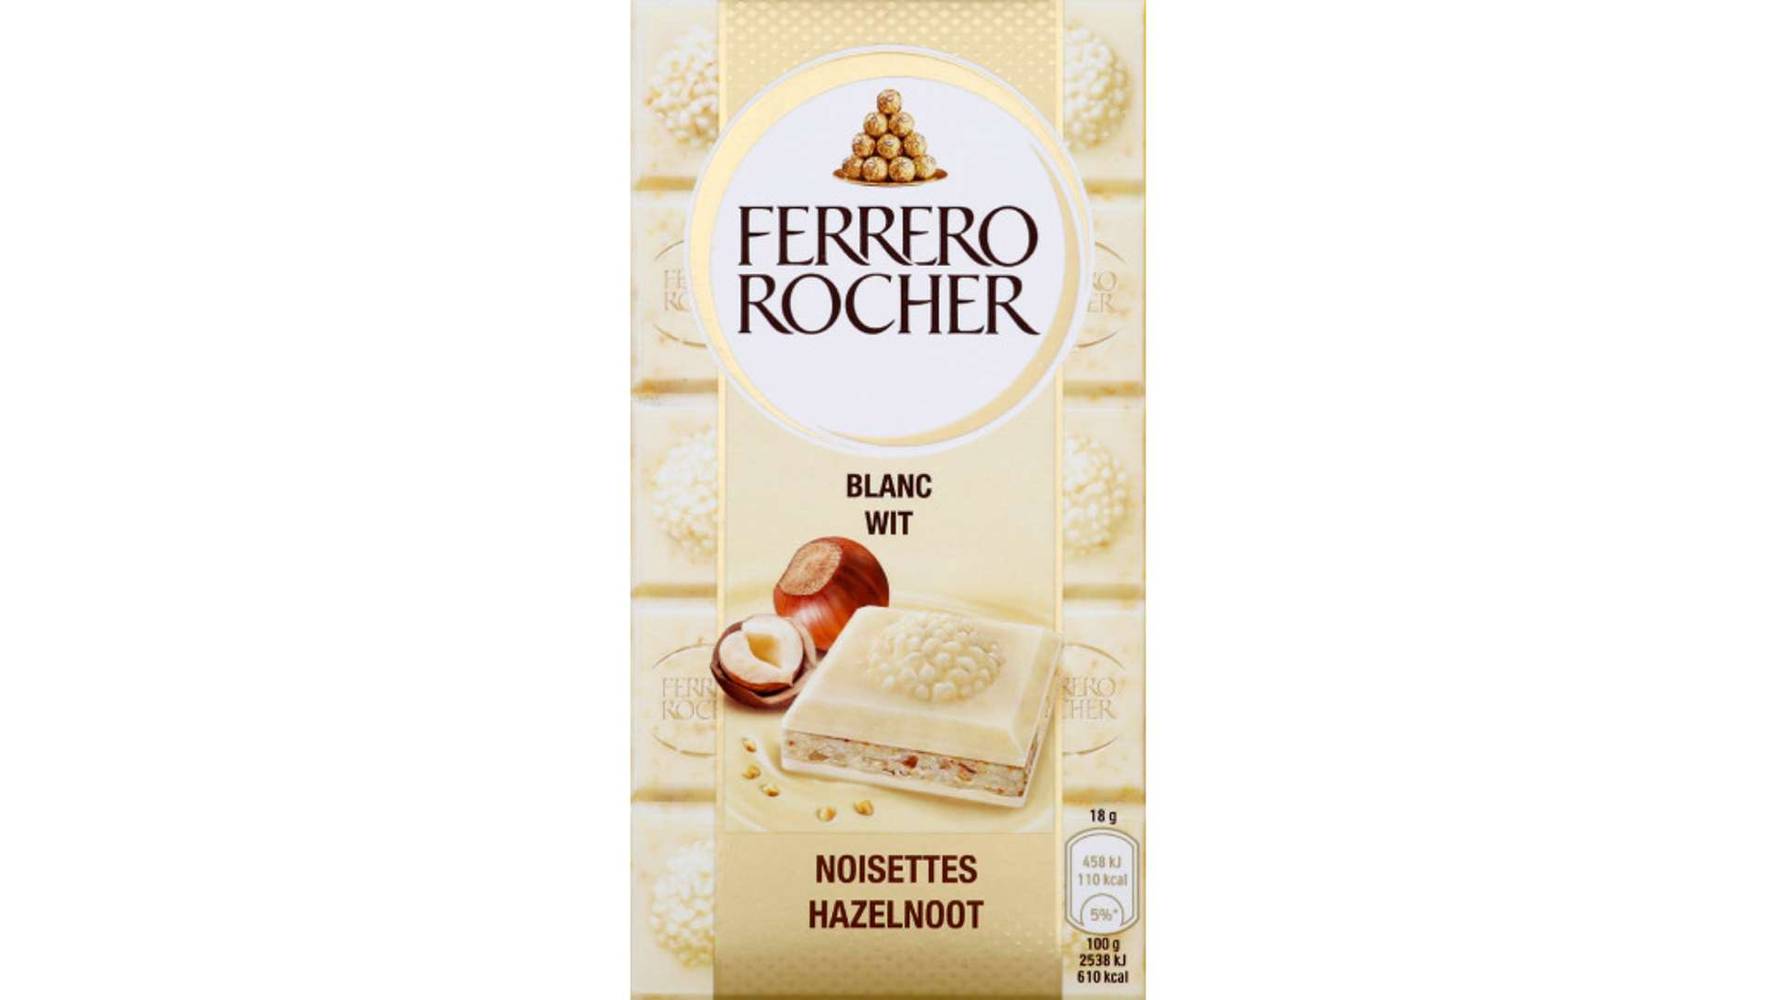 ROCHER Ferrero rocher tablette chocolat blanc noisettes La tablette de 90g